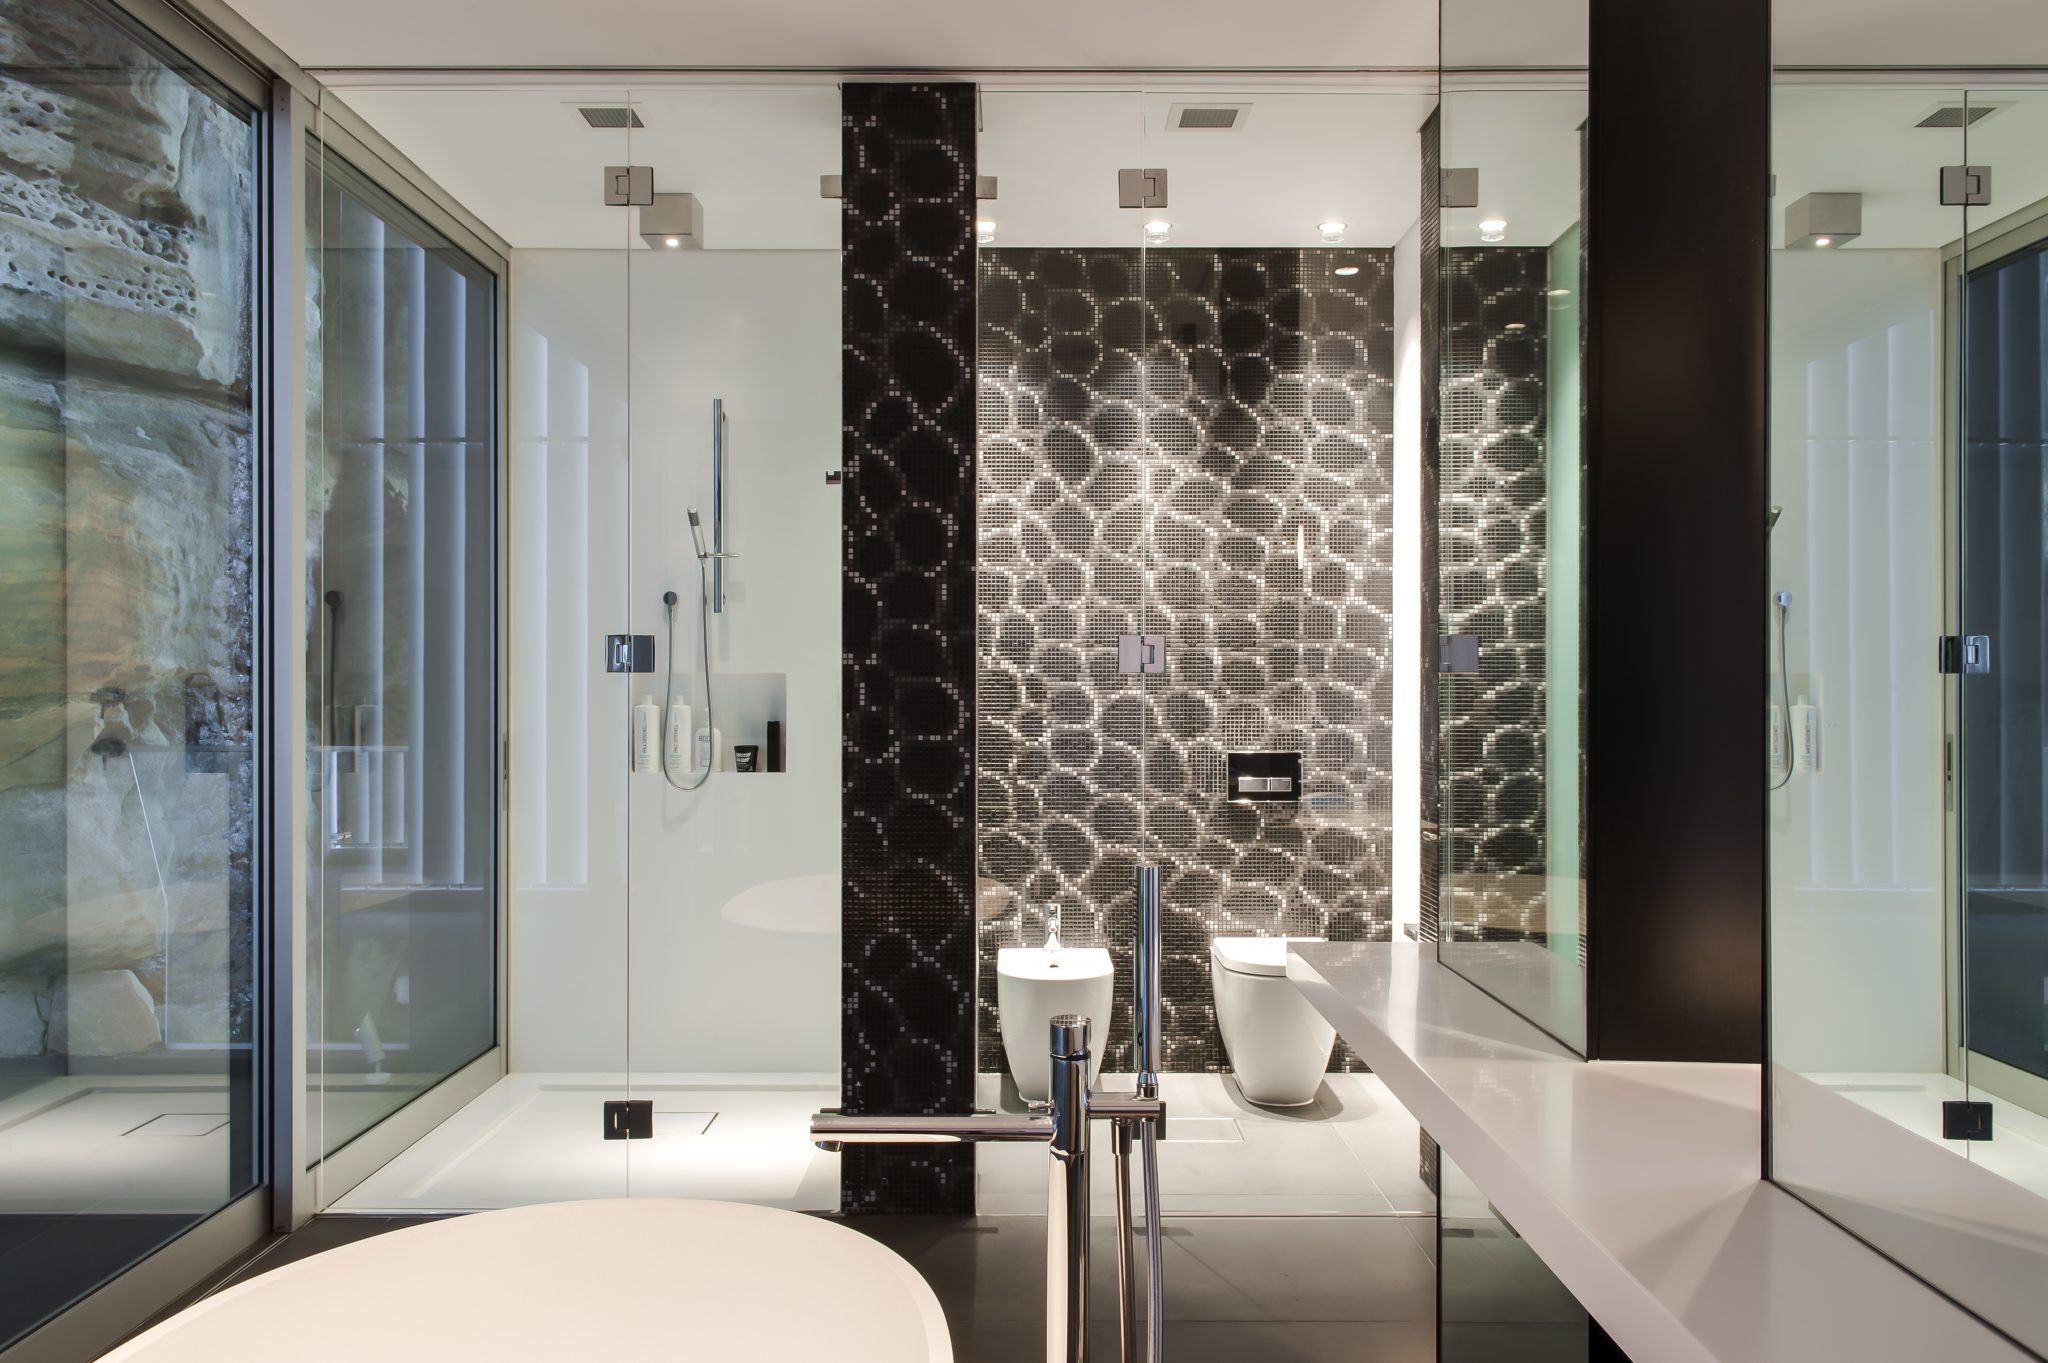 minosa-darren-genner-simona-castagna-win-international-design-award-desiger-kitchen-bathroom-2014-03